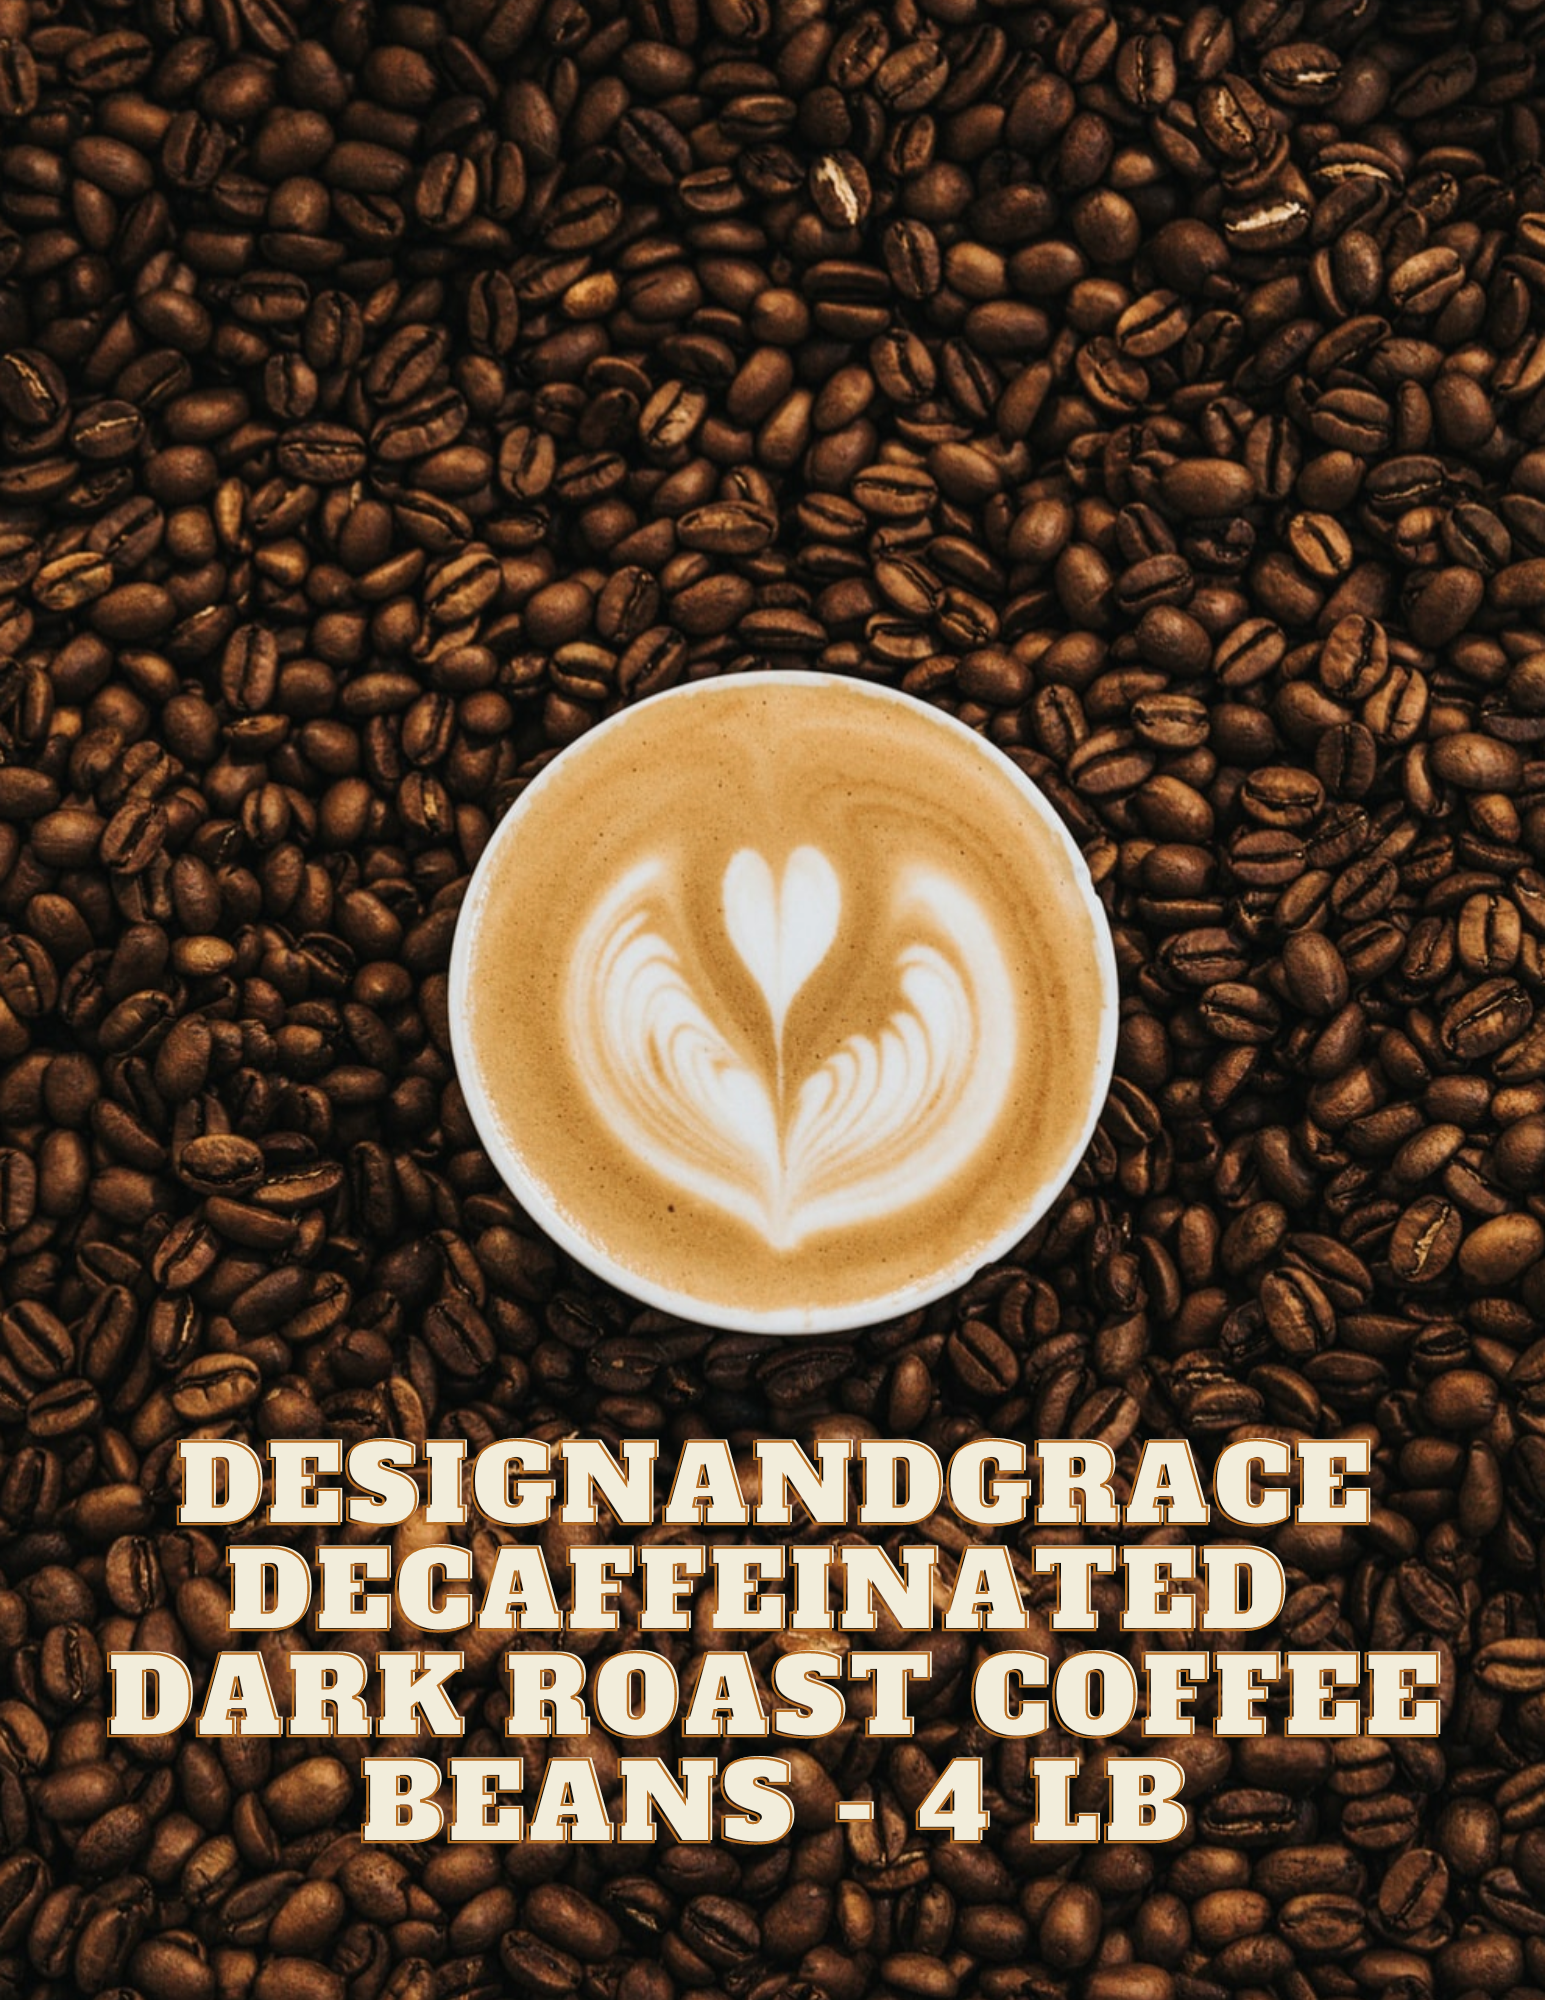 DesignandGrace Decaffeinated Dark Roast Coffee Beans - 4 lb